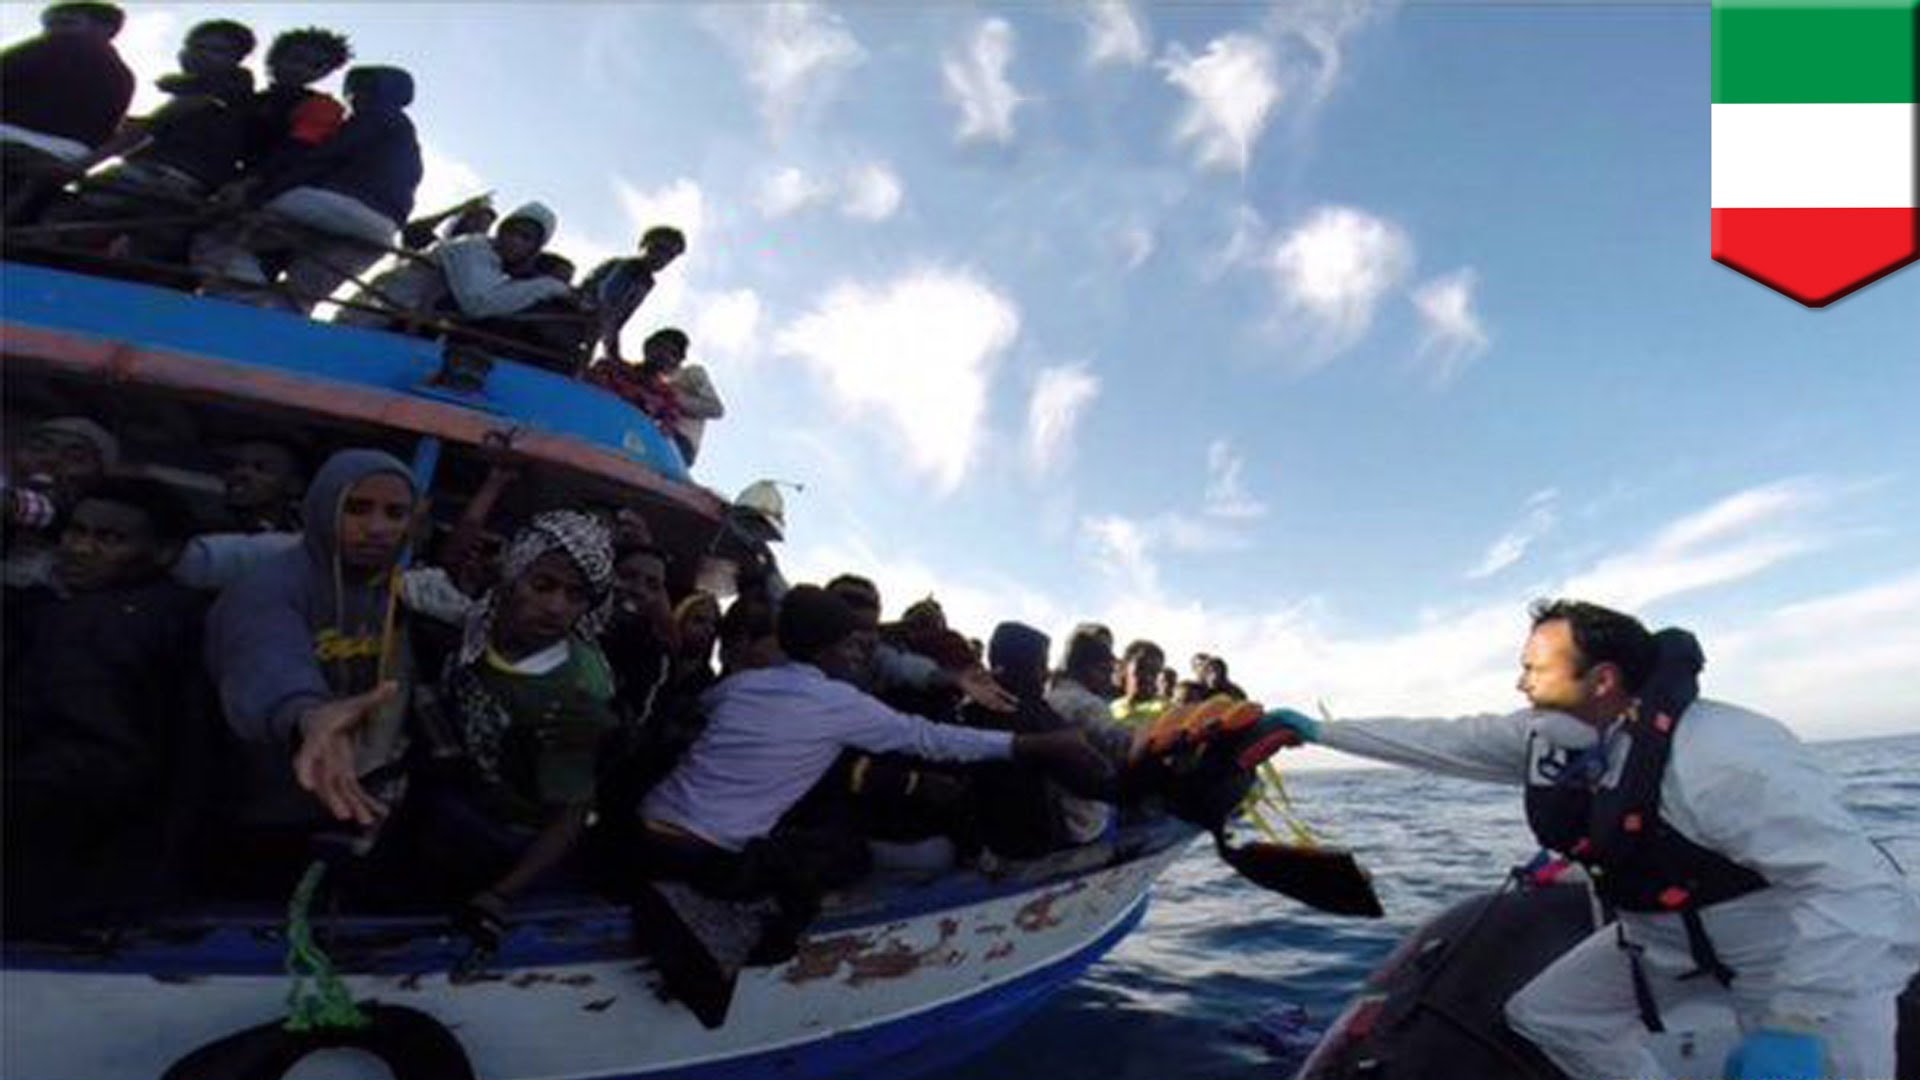 200 migrants feared drowned in Mediterranean